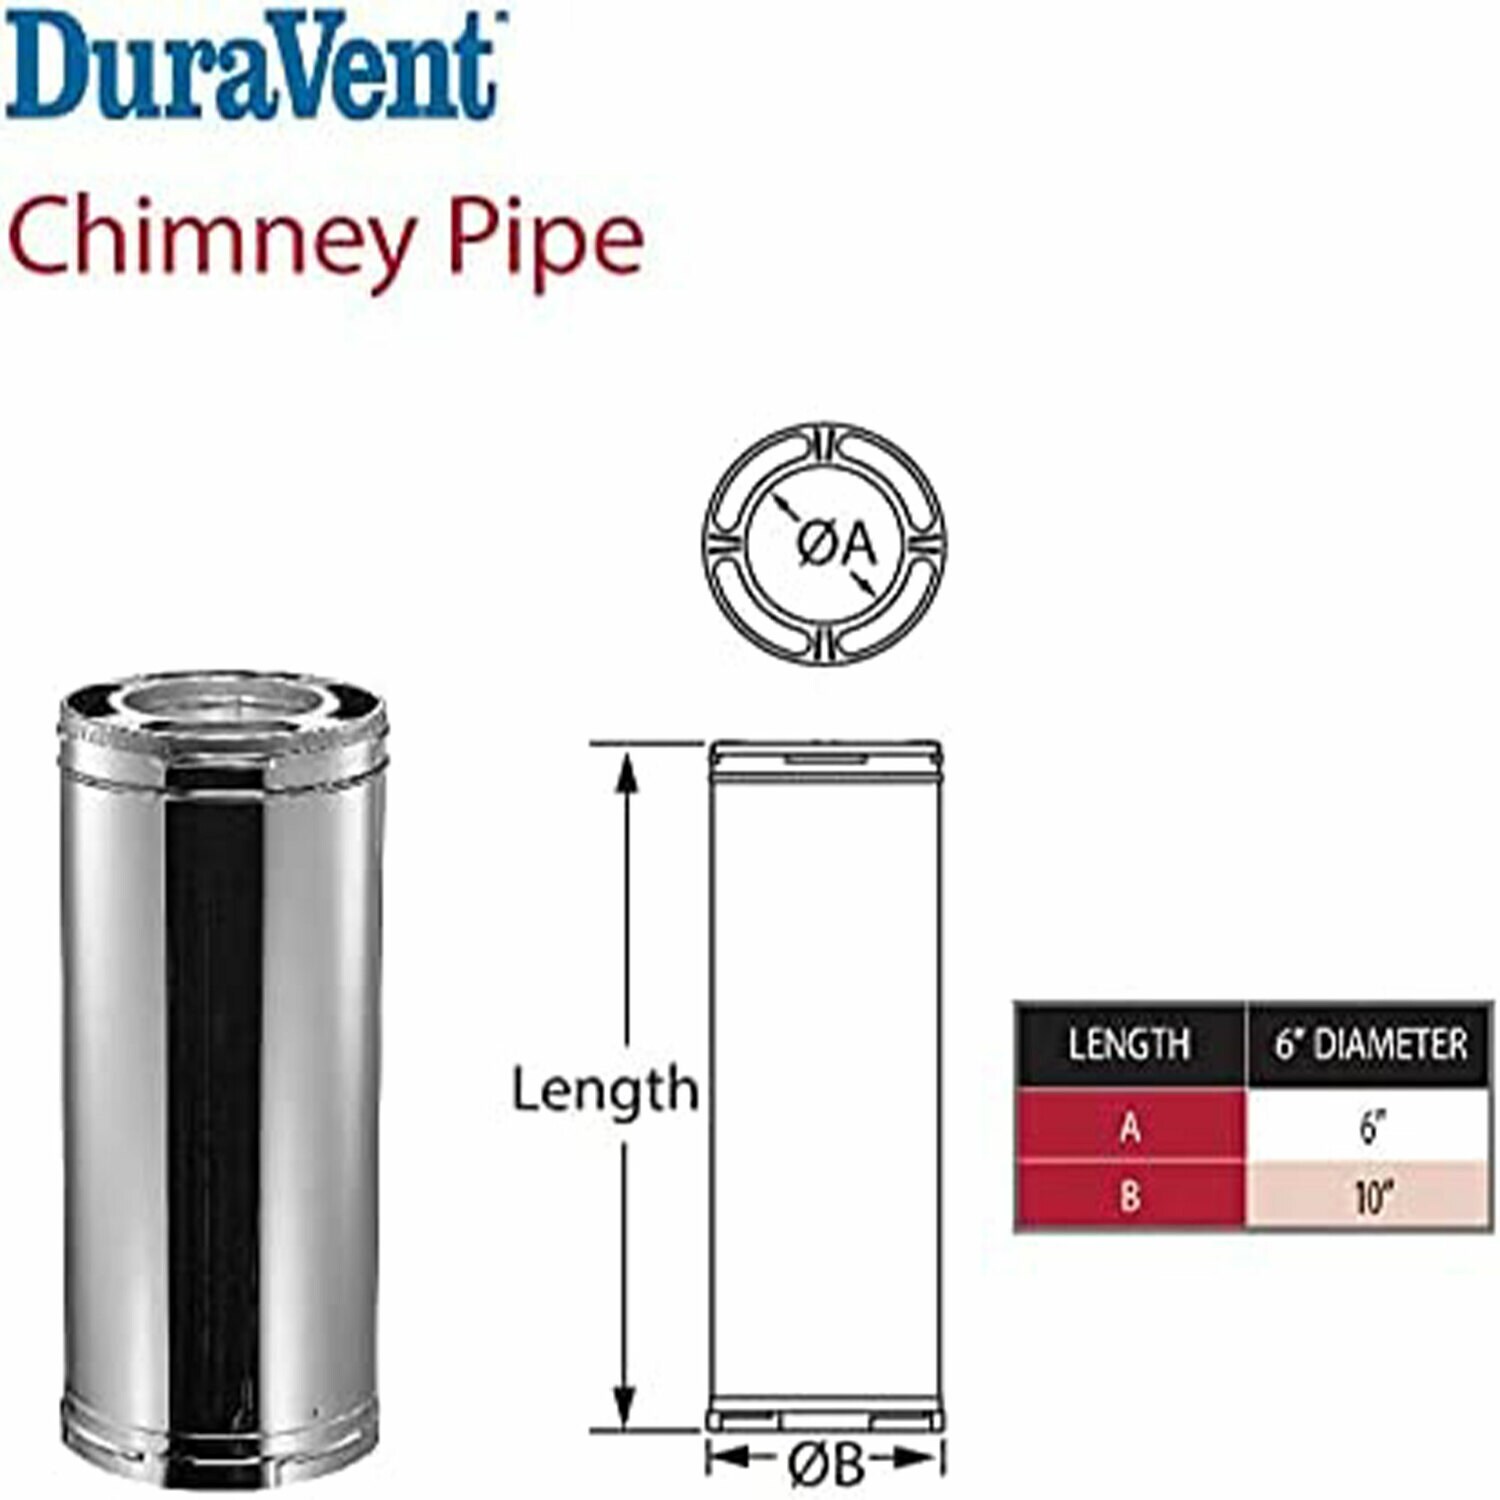 DuraVent 6dp-24 DuraPlus 6 in. Diameter x 24 in. Chimney Pipe